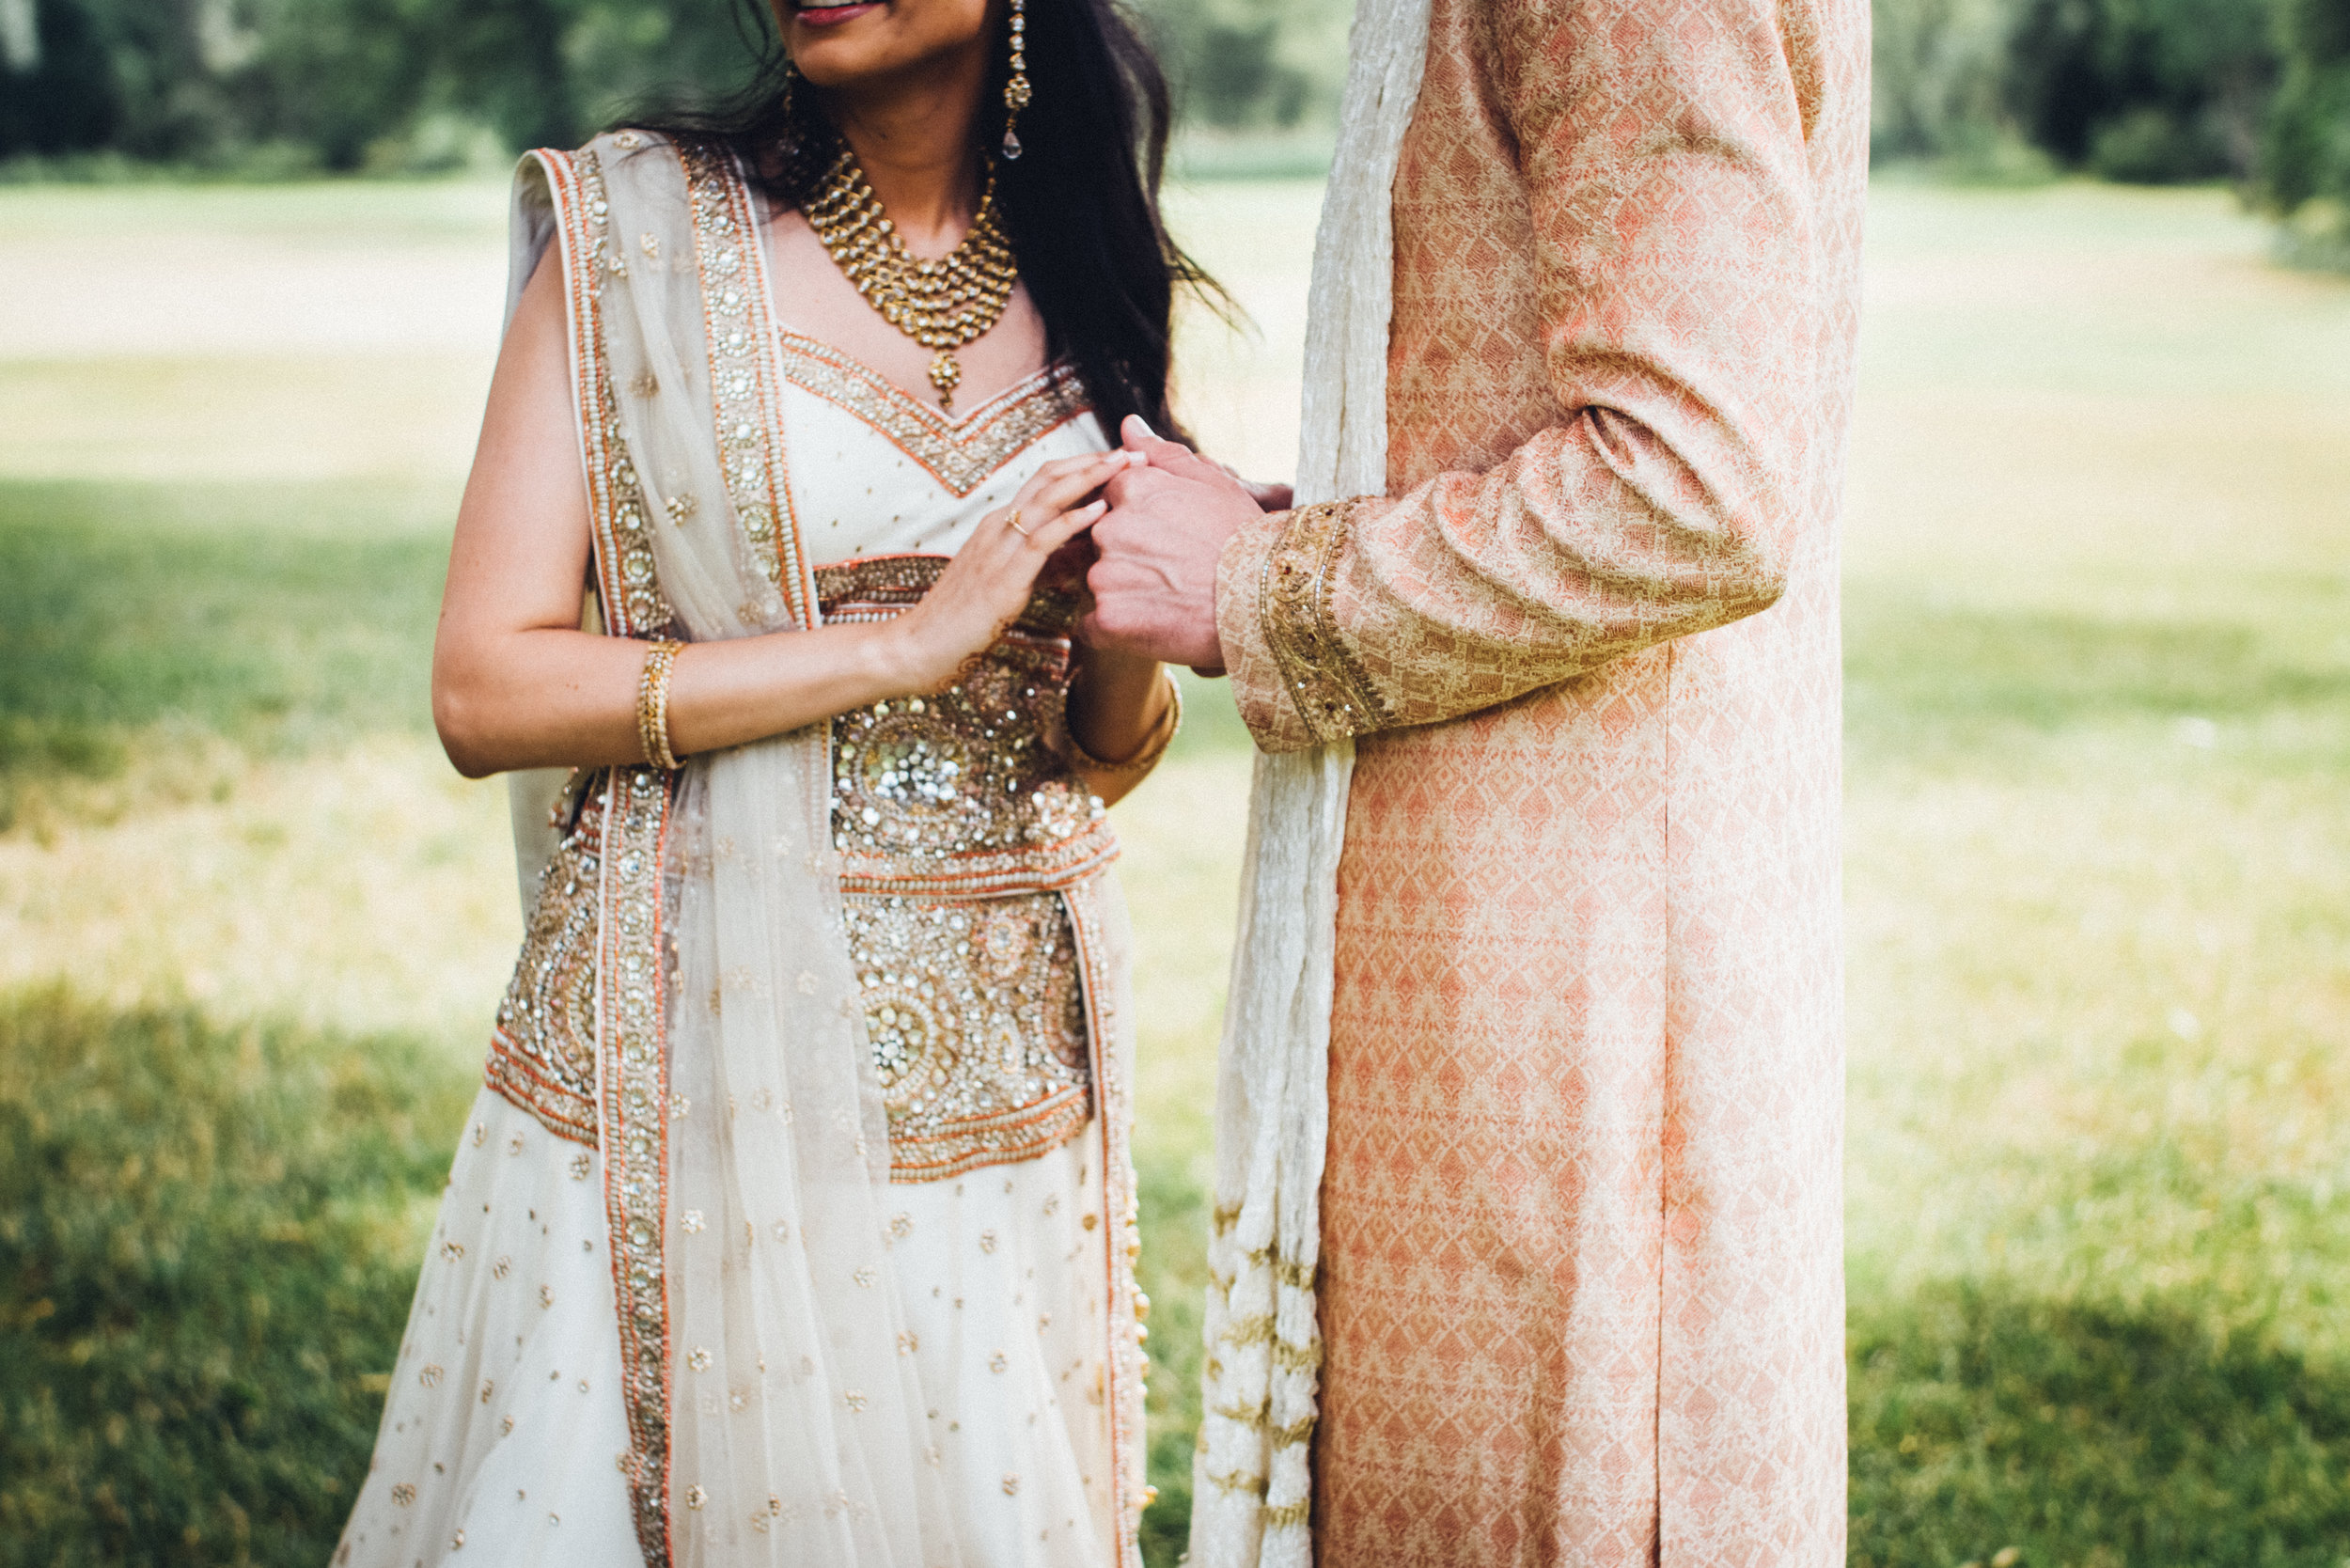 award-winning-wedding-photographer-photographers-photography-detorit-avani-khristoph-becker-bhatt-shadow-shine-pictures-michigan